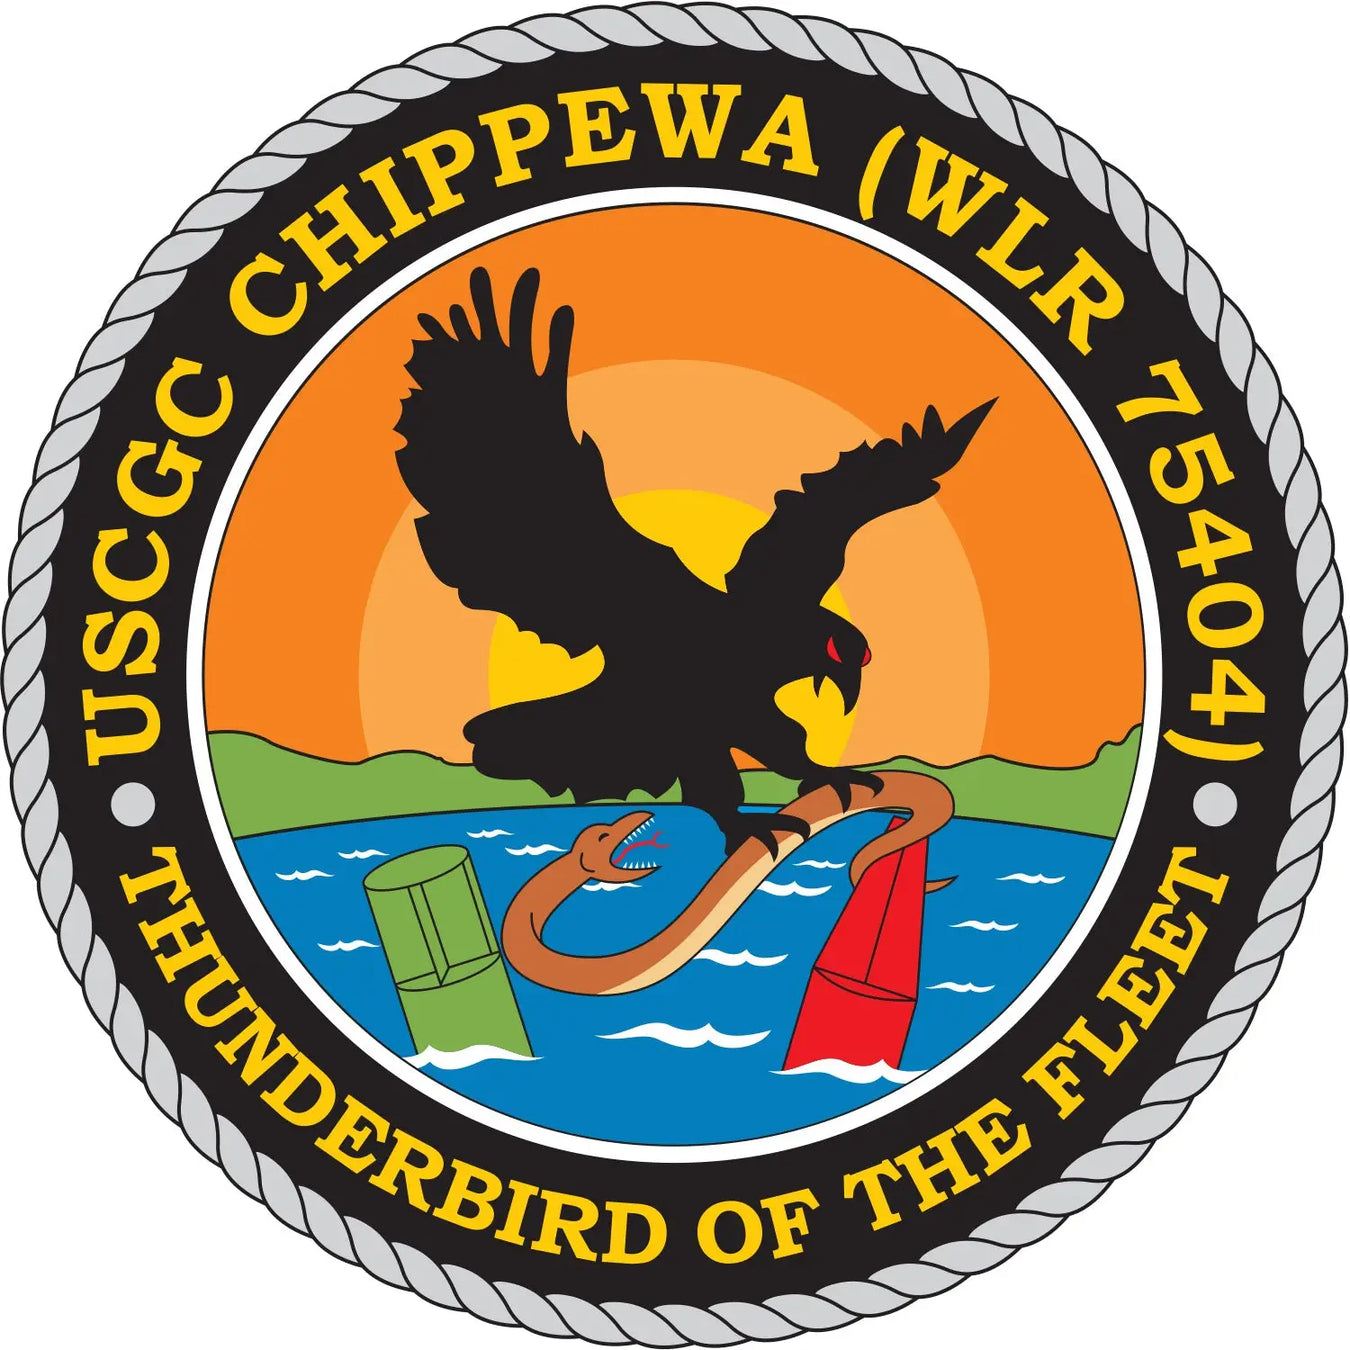 USCGC Chippewa (WLR-75404)